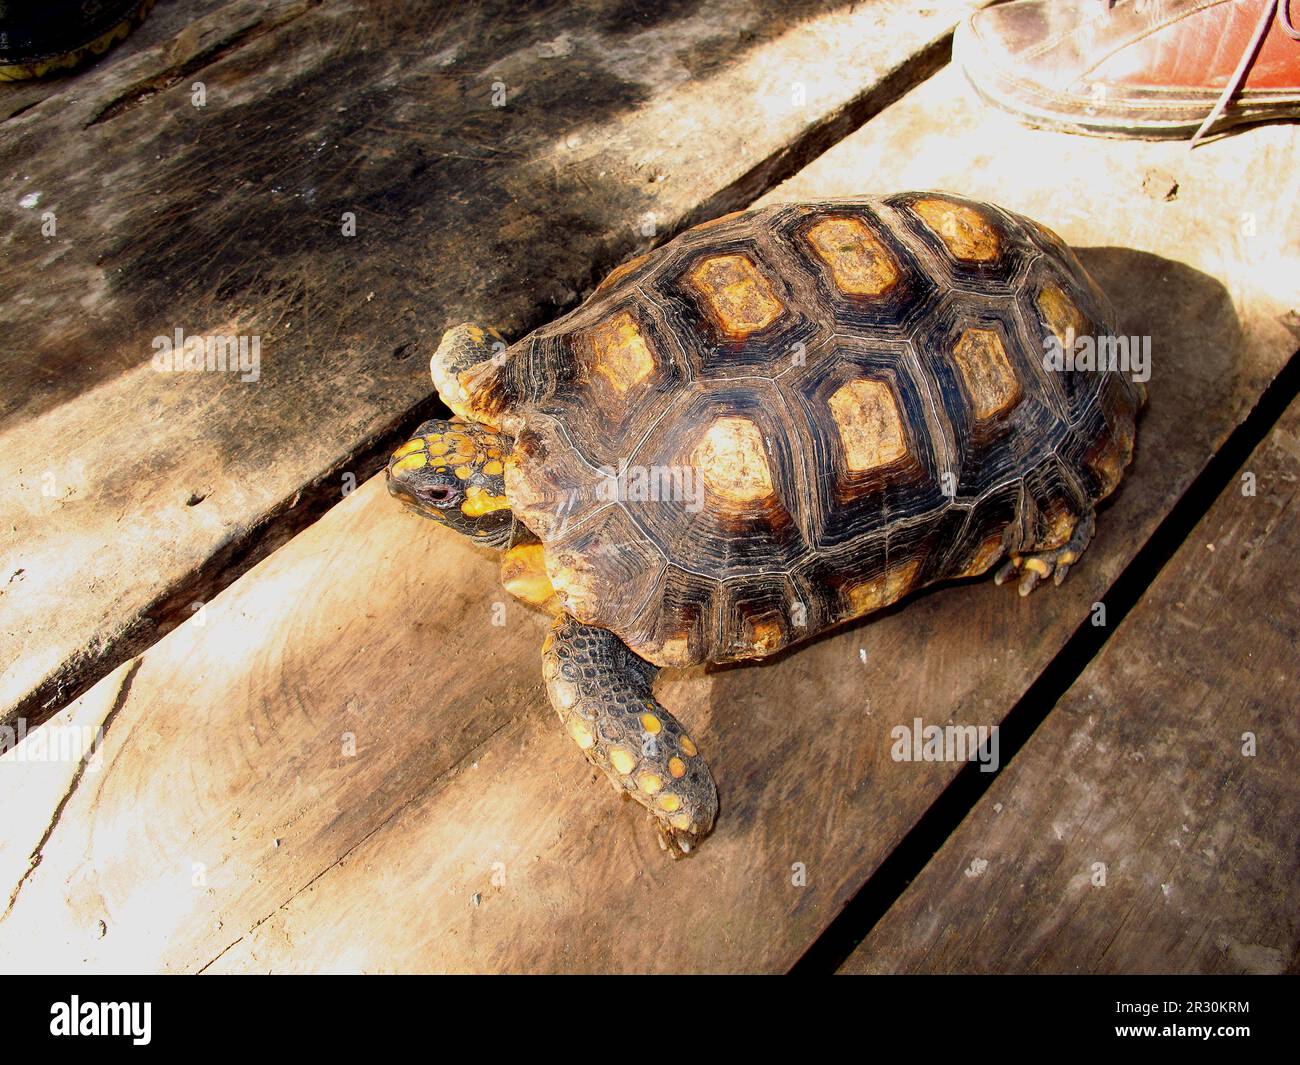 Turtle on Amazon river in Peru Stock Photo